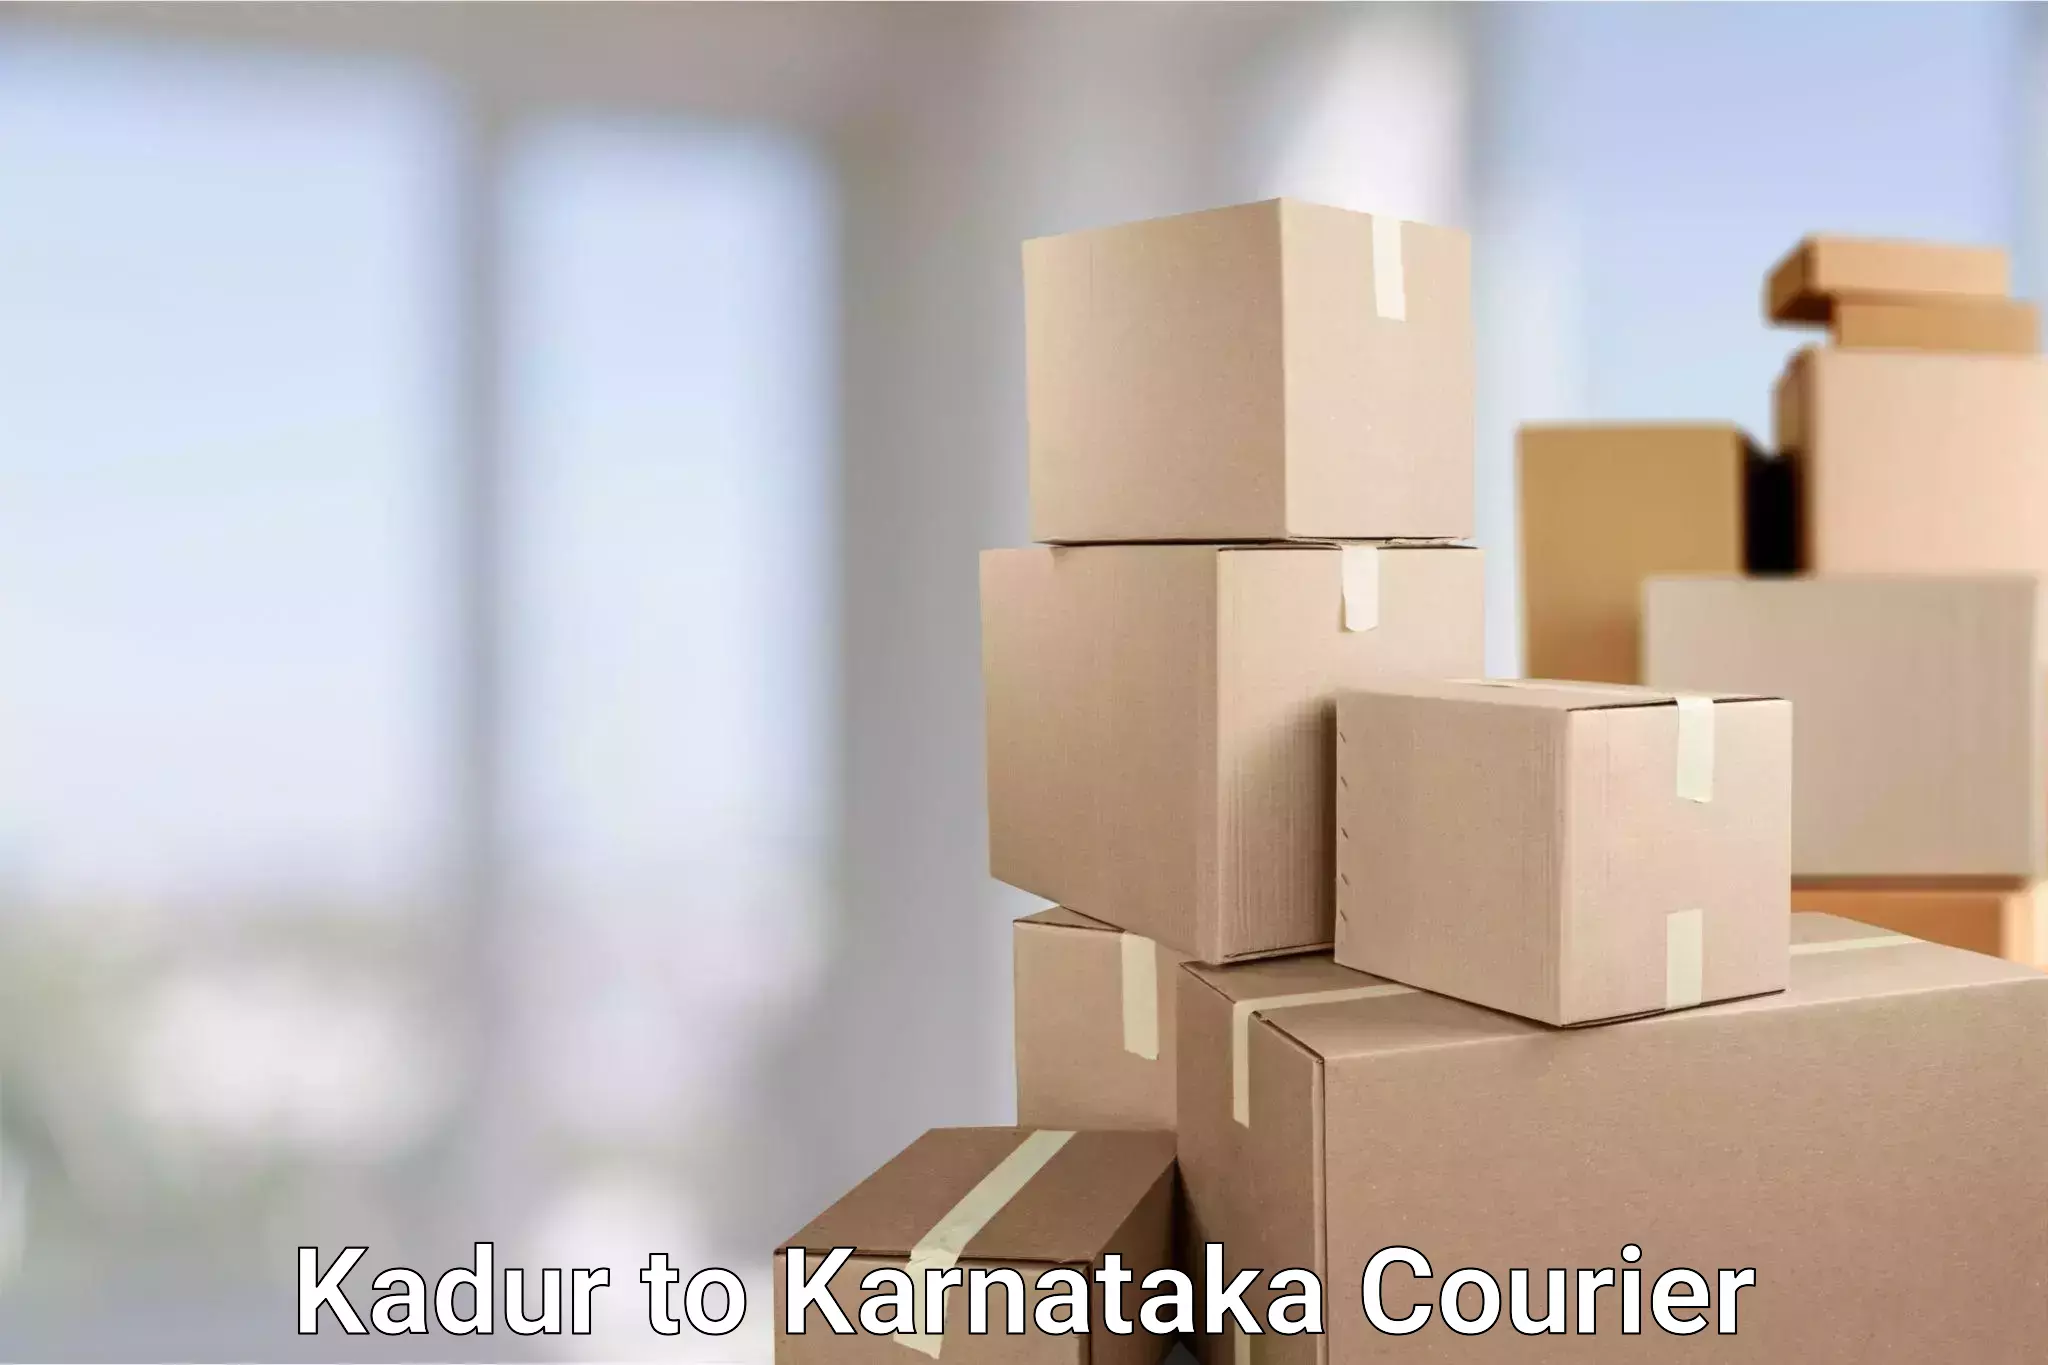 24-hour delivery options Kadur to Eedu